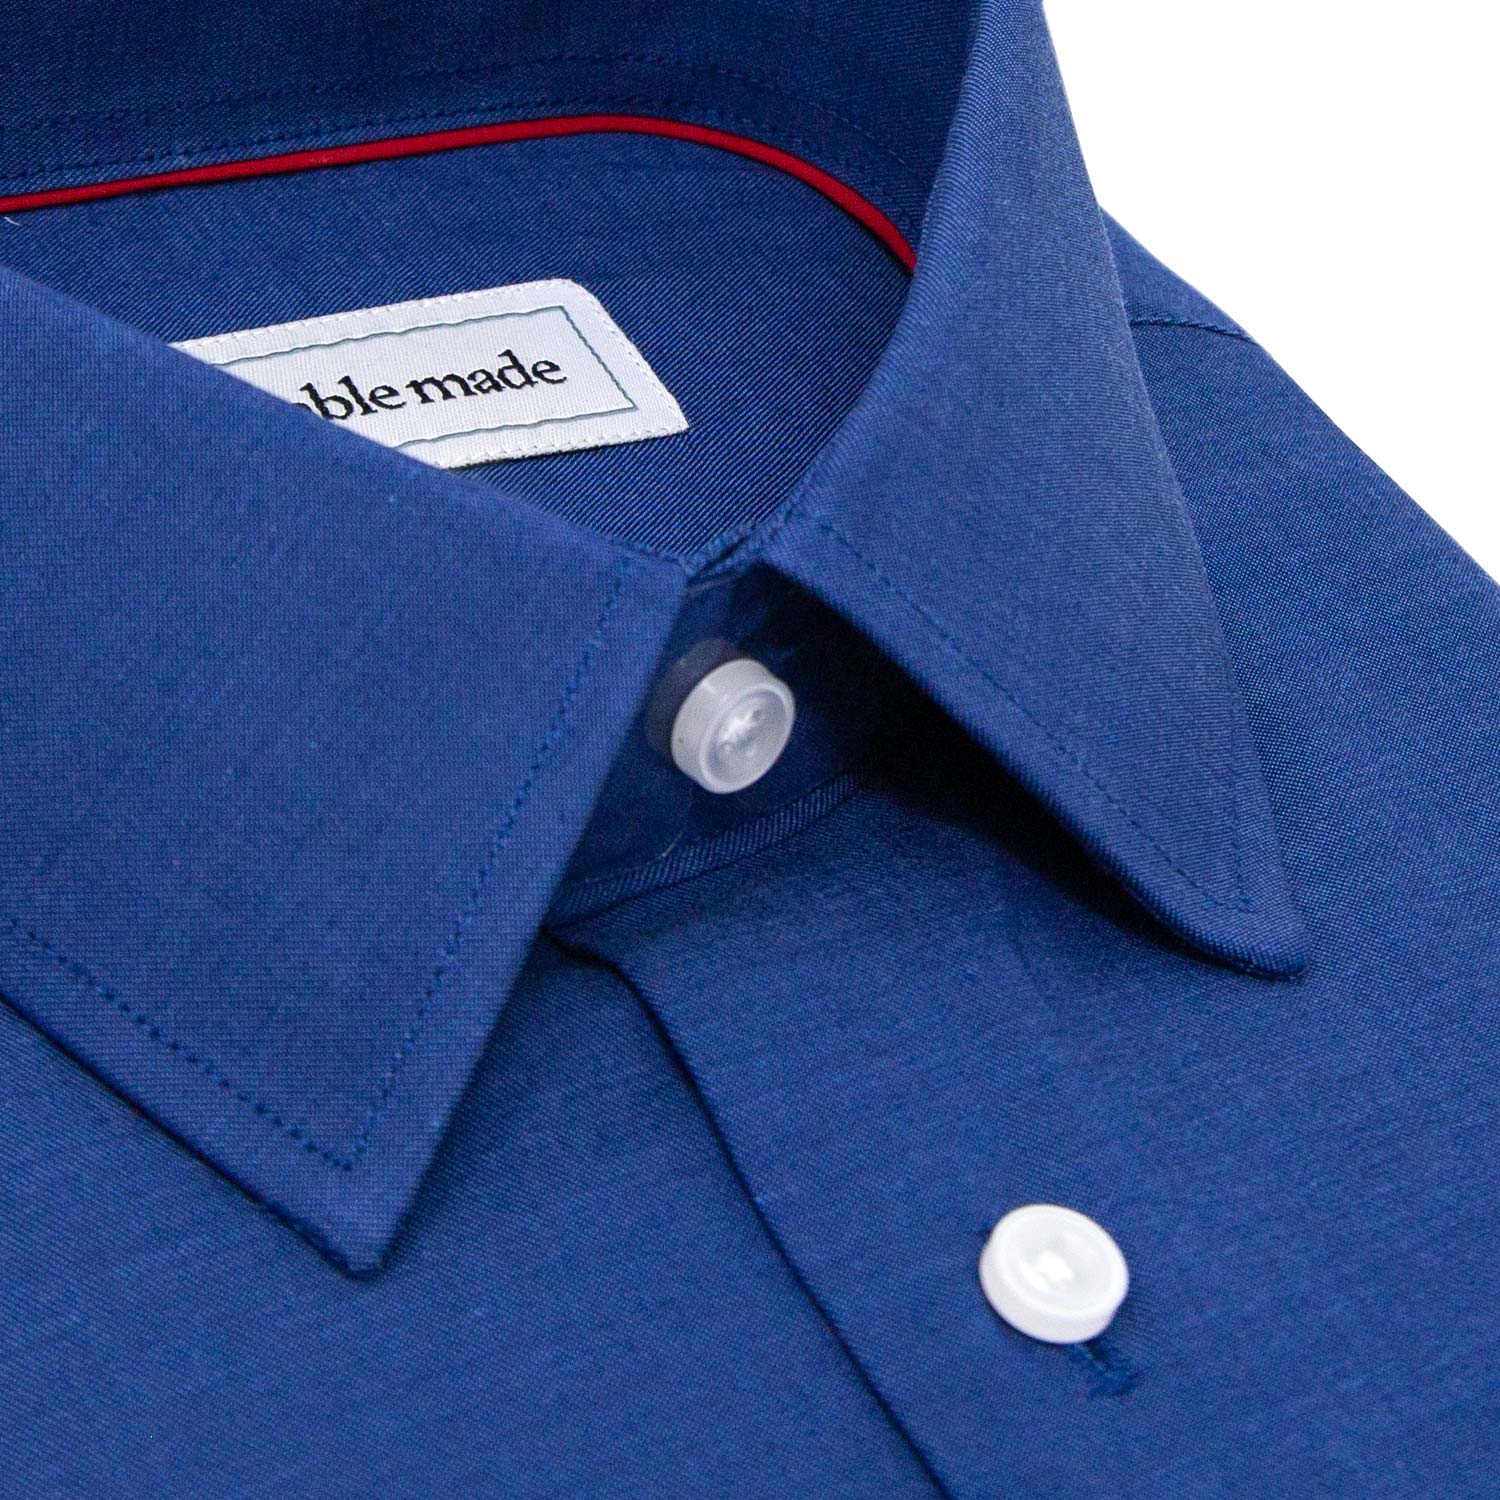 mens slim fit blue collared shirt closeup on collar